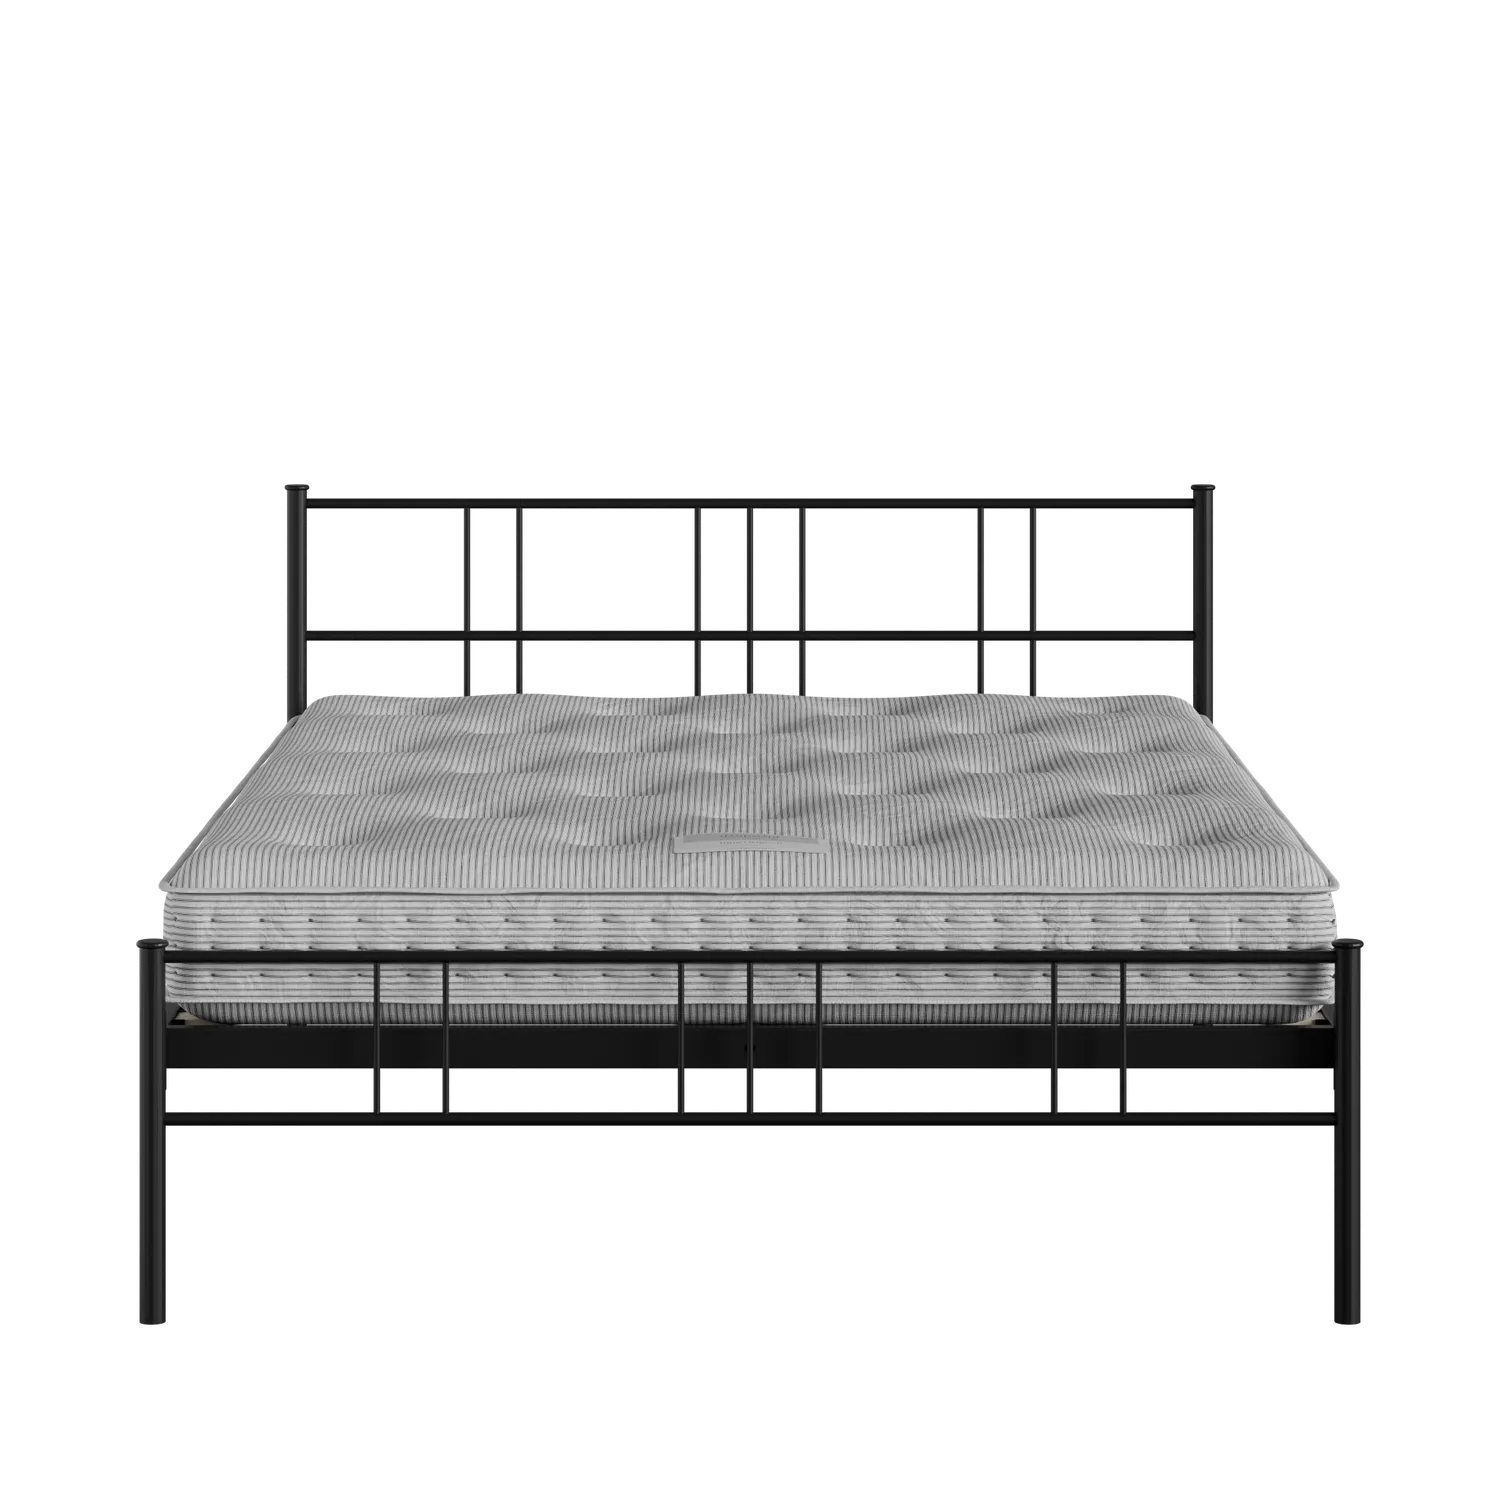 Mortlake iron/metal bed in black with Juno mattress